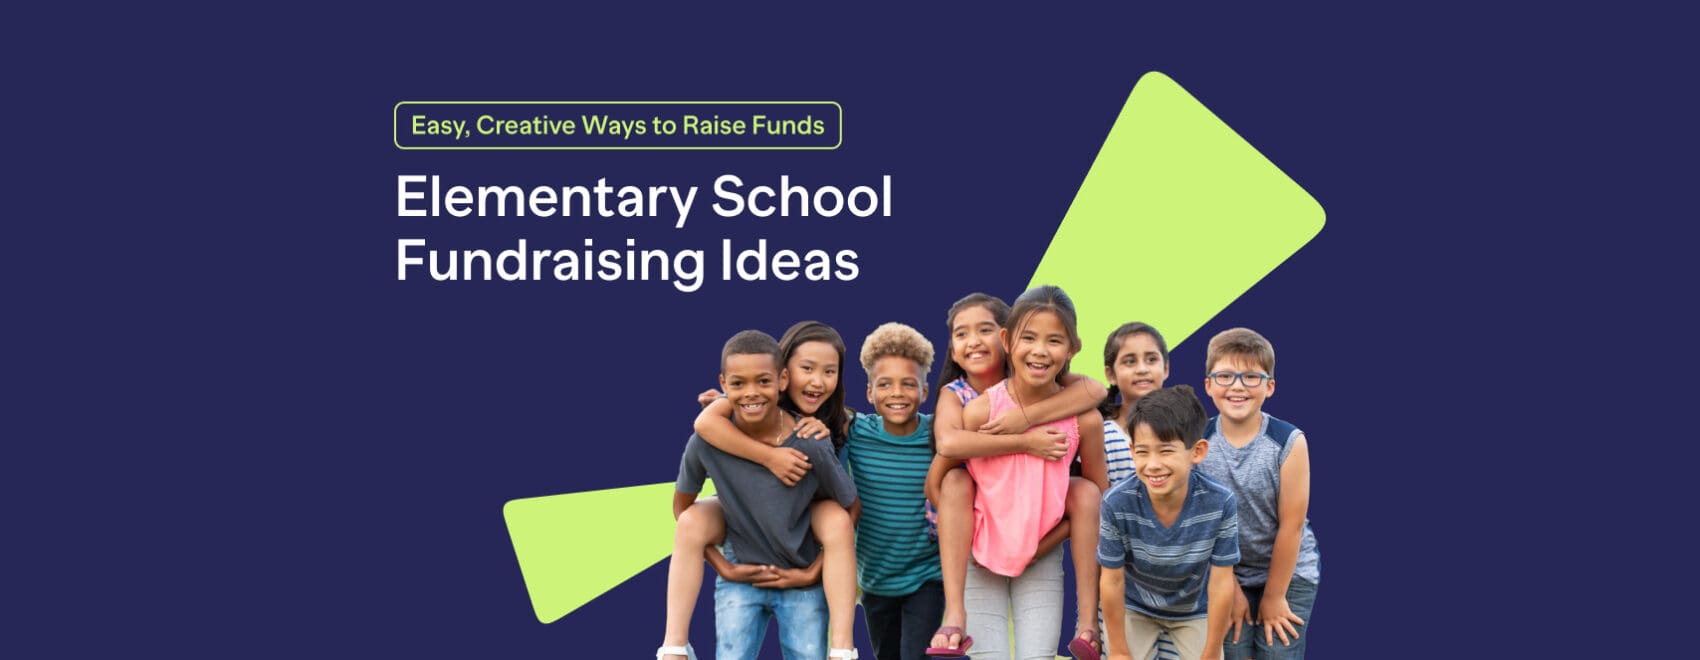 Elementary School Fundraising Ideas